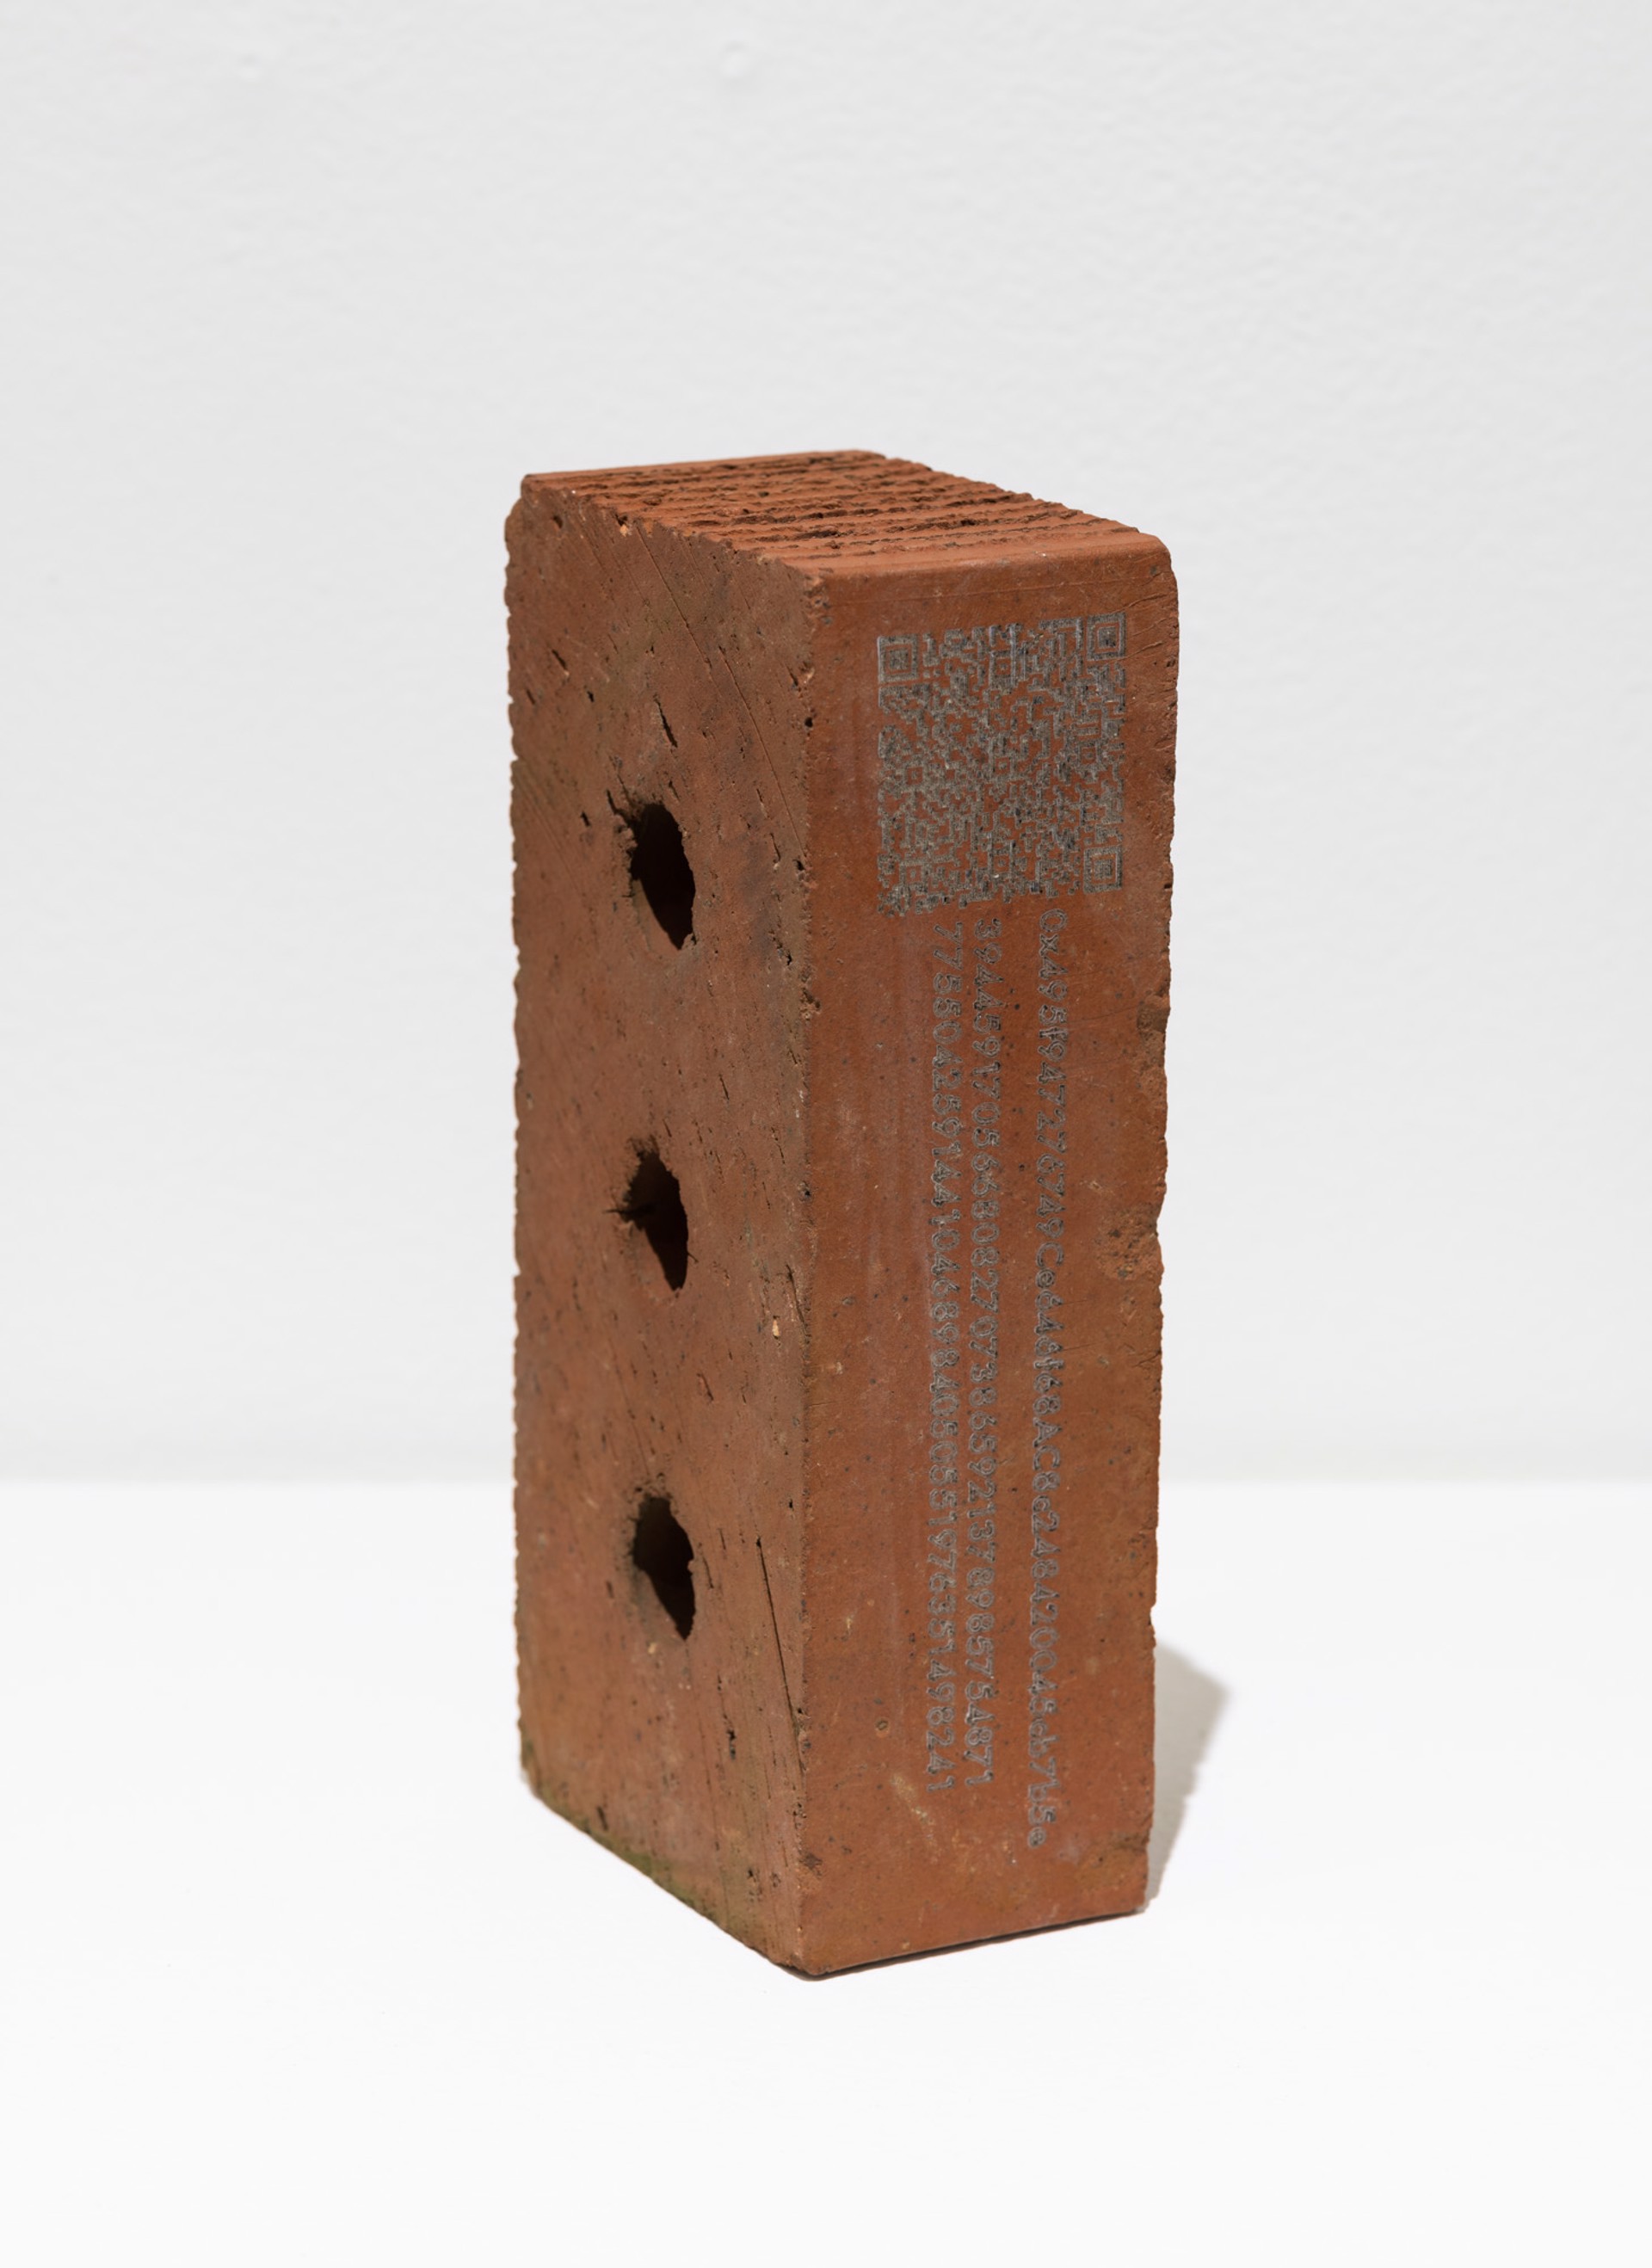 Brick 1 by Josh Hughes